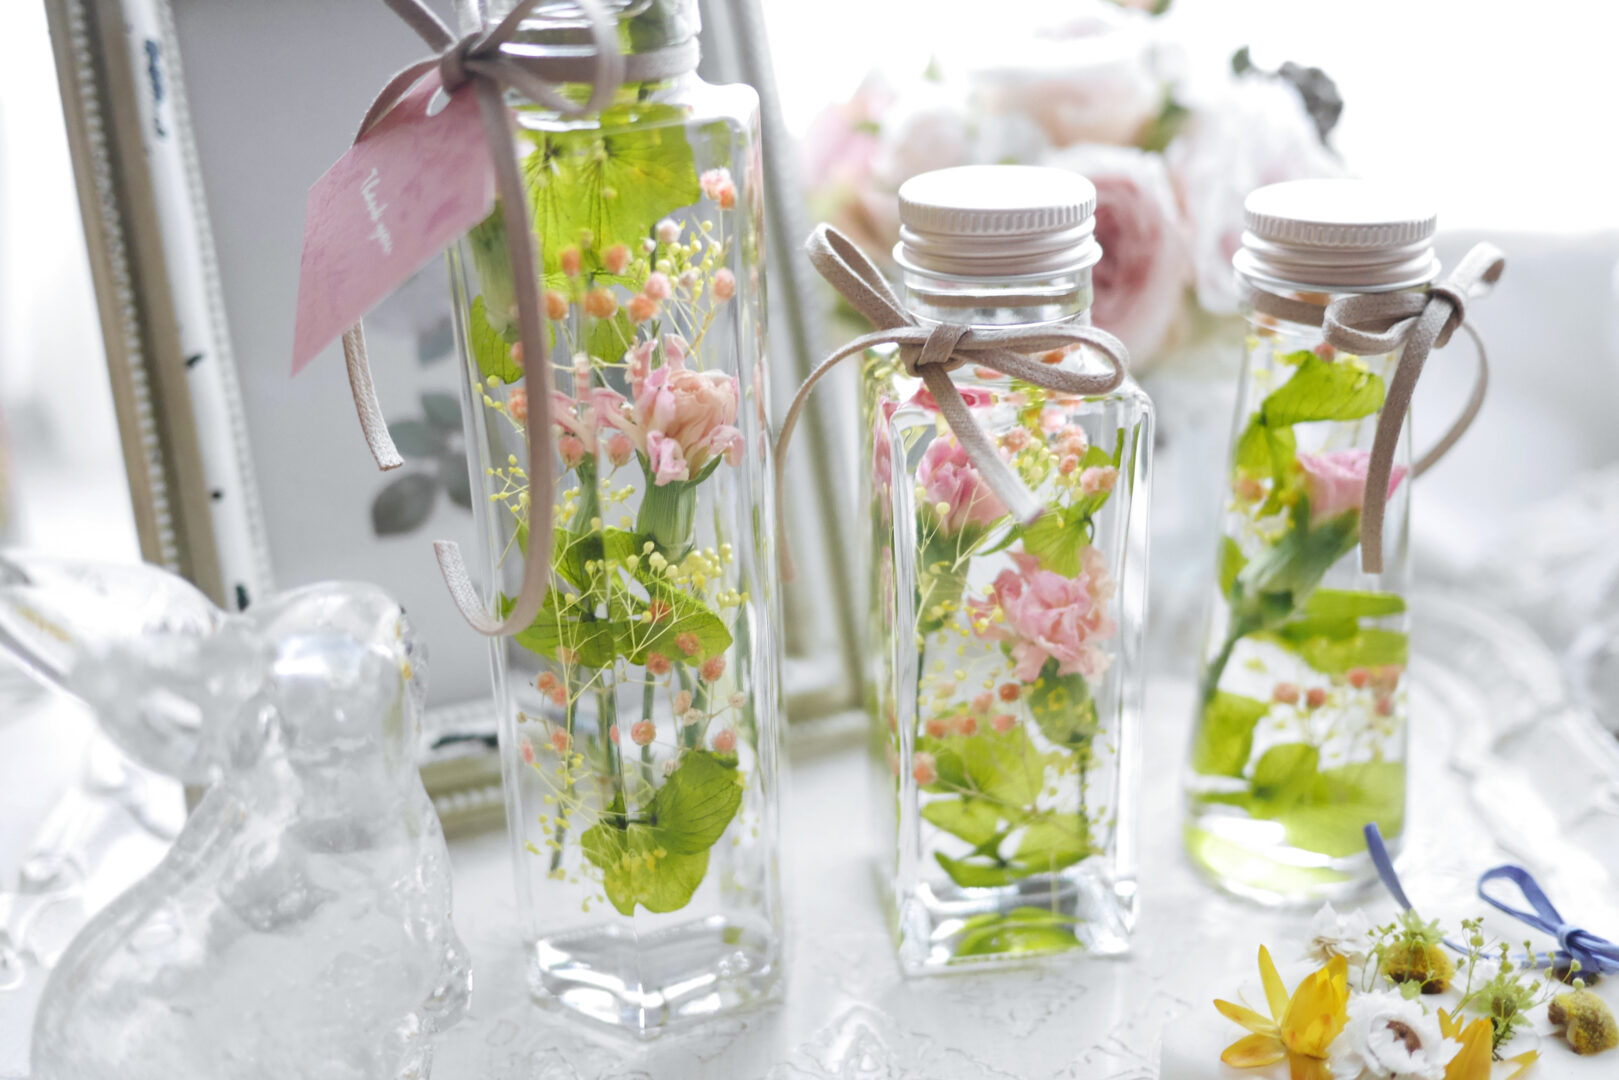 how long should you use flower essences